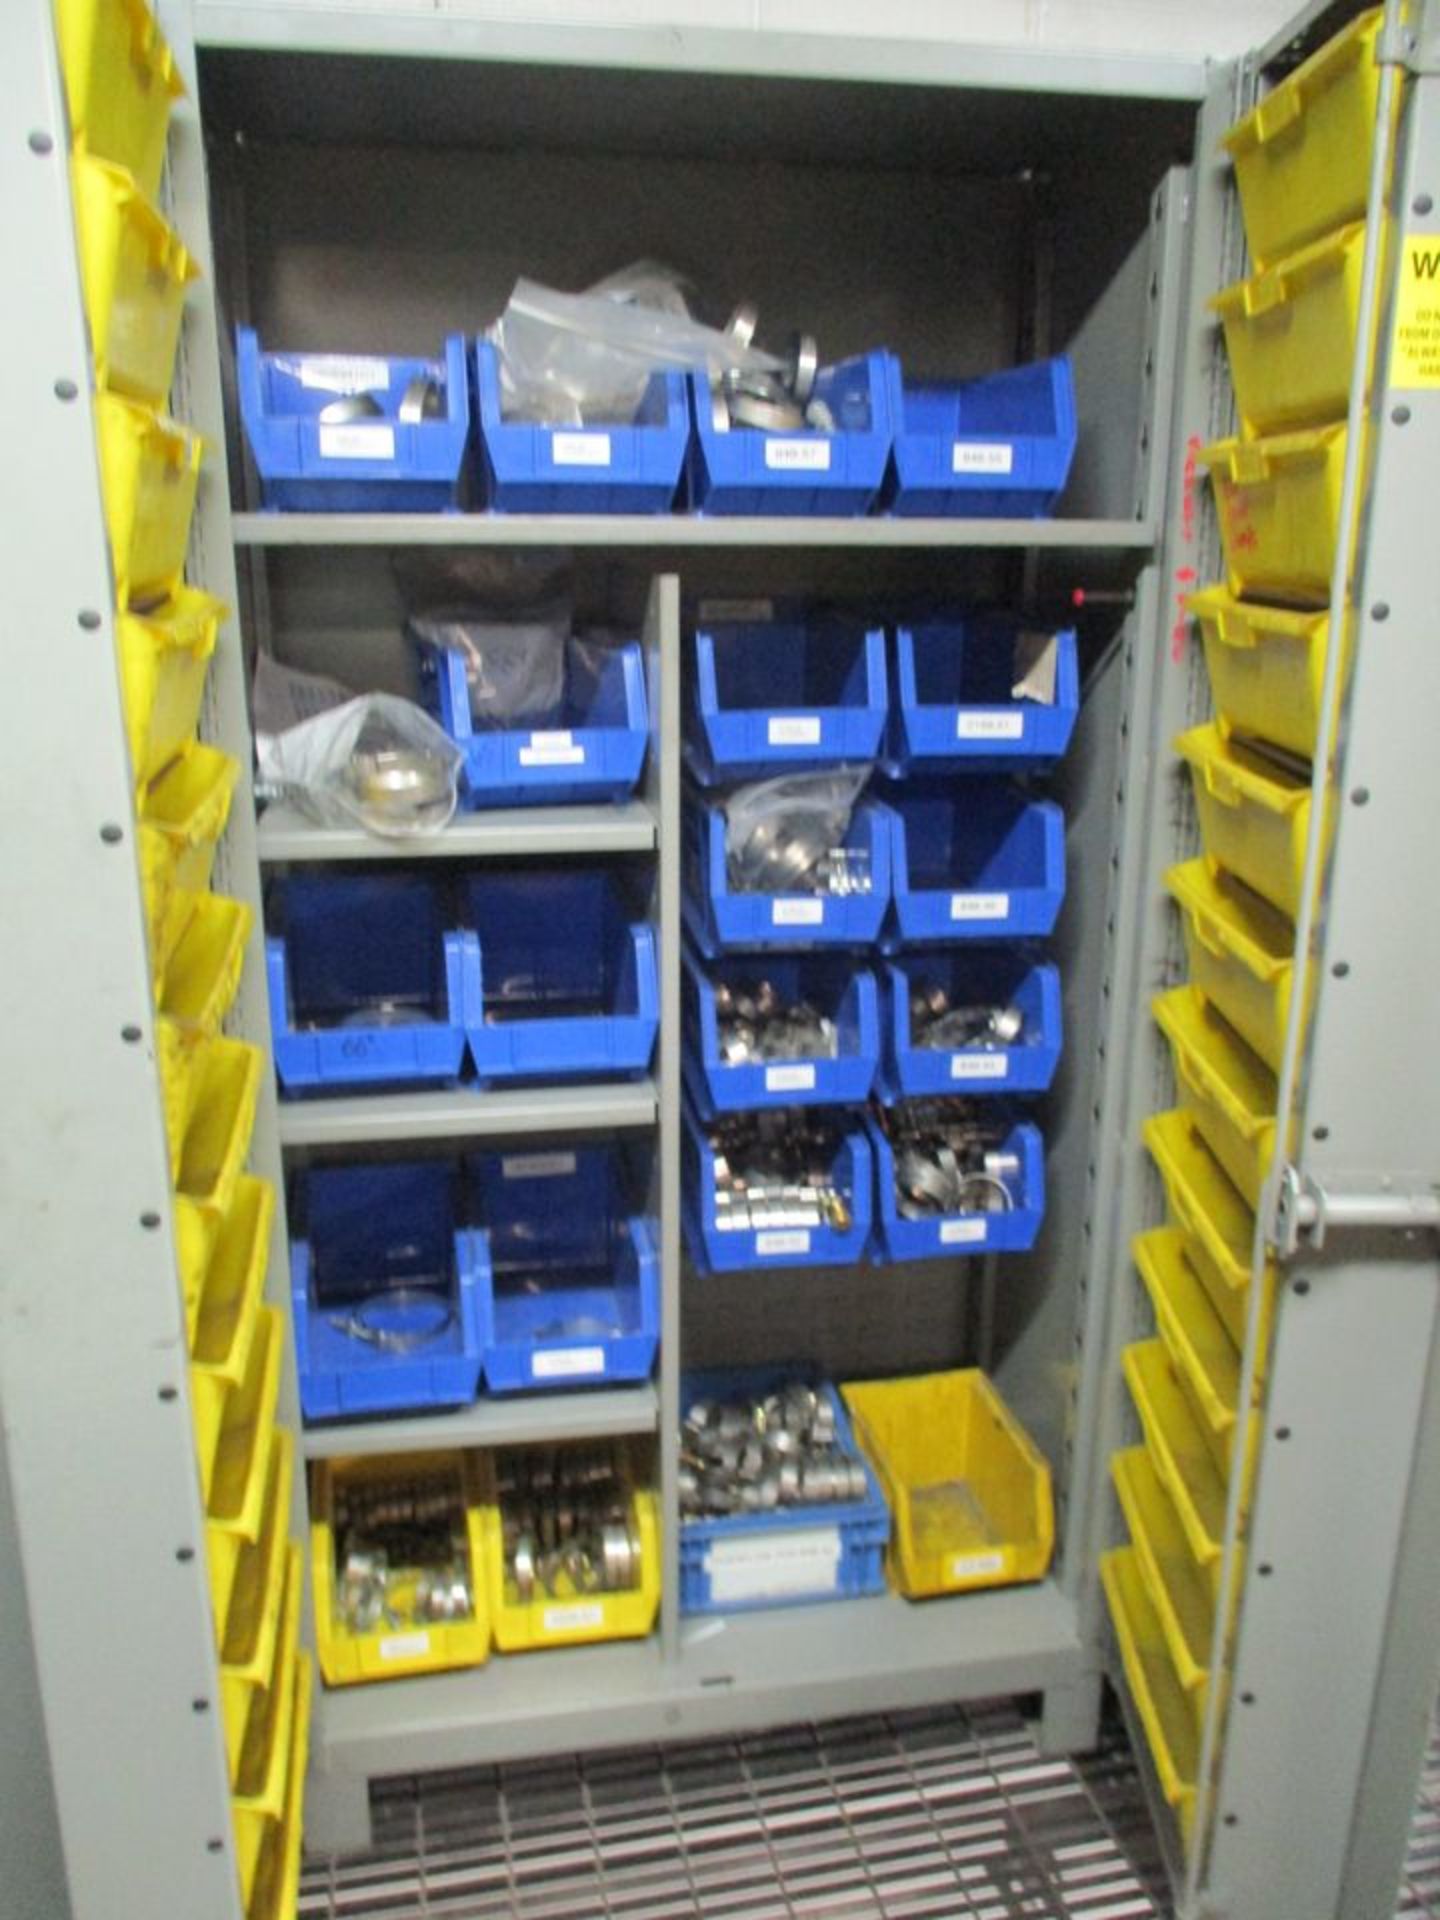 Lyon 2-Door Heavy Duty Storage Cabinet (Oil Room - Mezzanine BZ 76) - Image 2 of 2